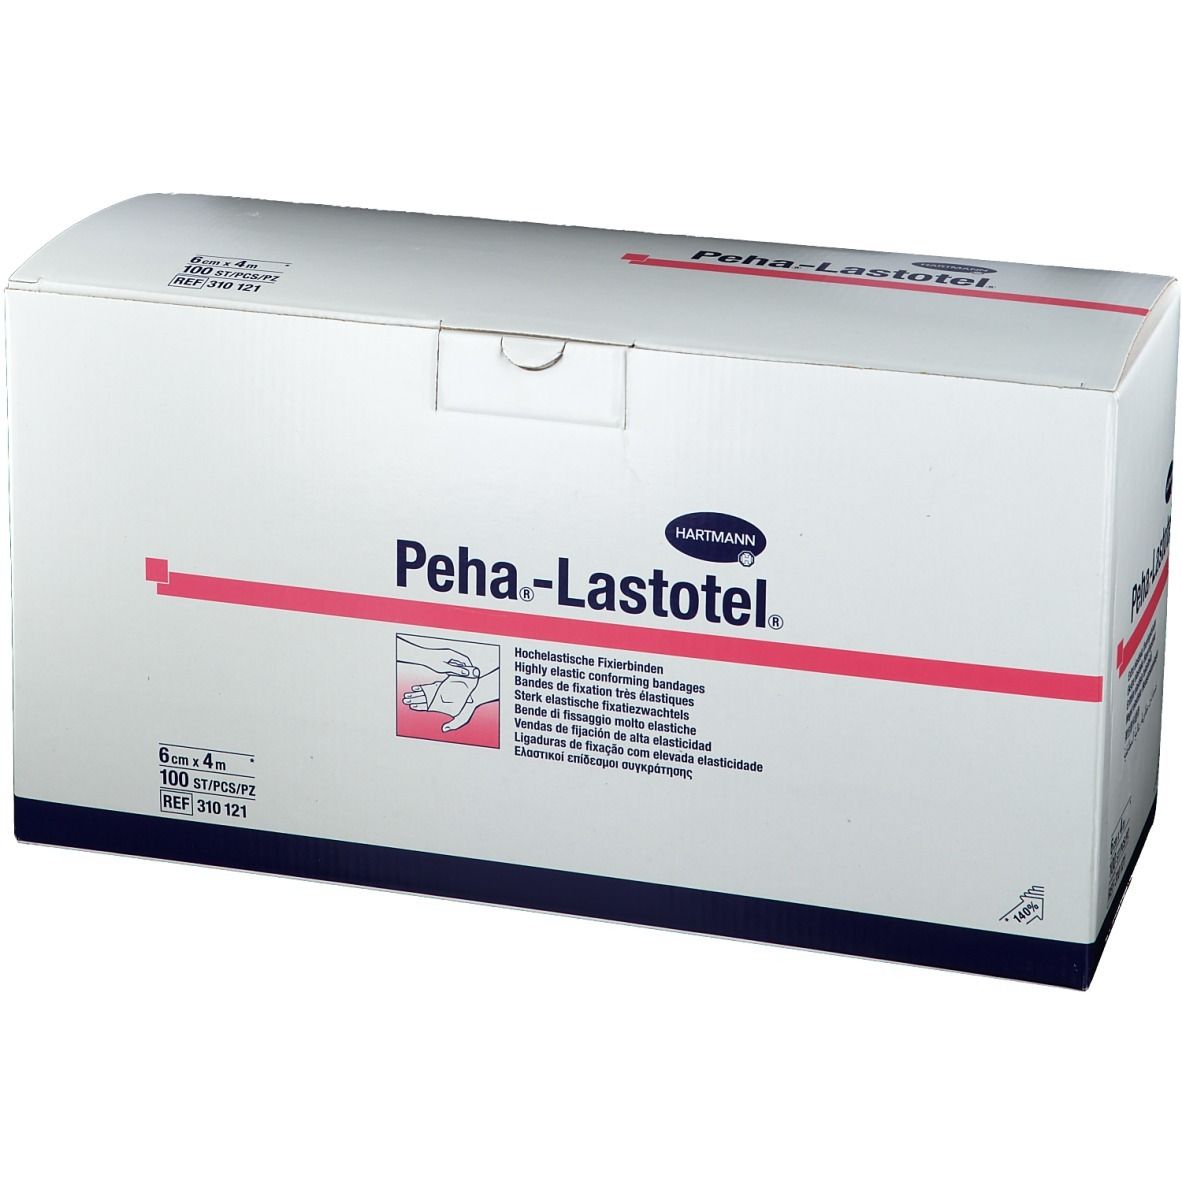 Peha®-Lastotel® 6 cm x 4 m